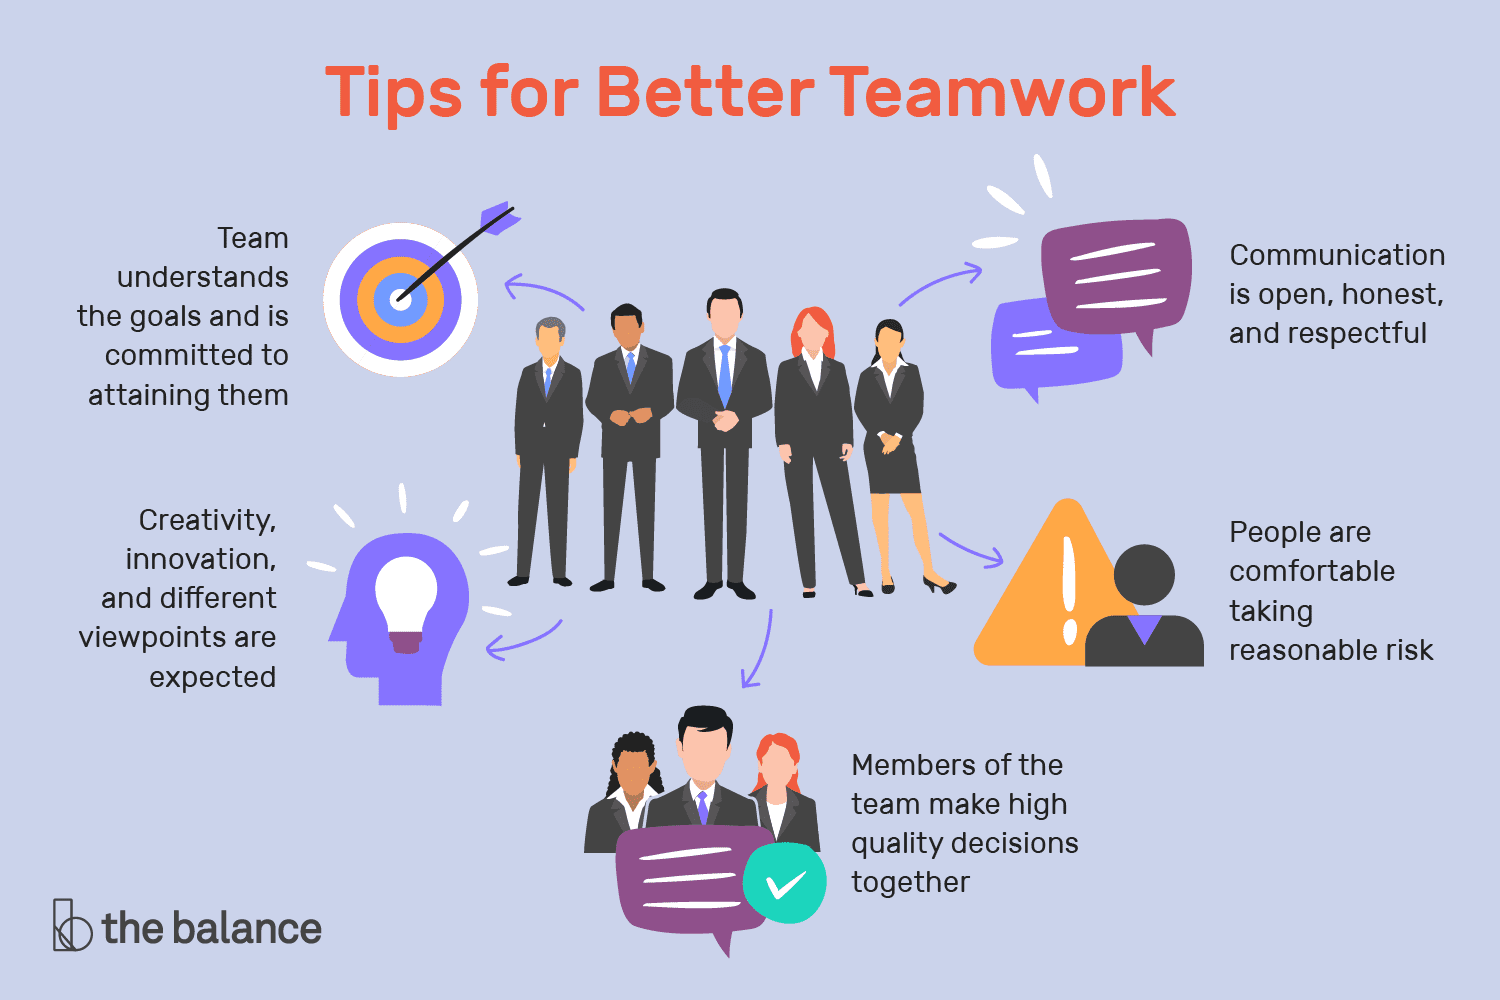 tips for better teamwork 1919225 v4 5b4dfa2746e0fb00371186e0